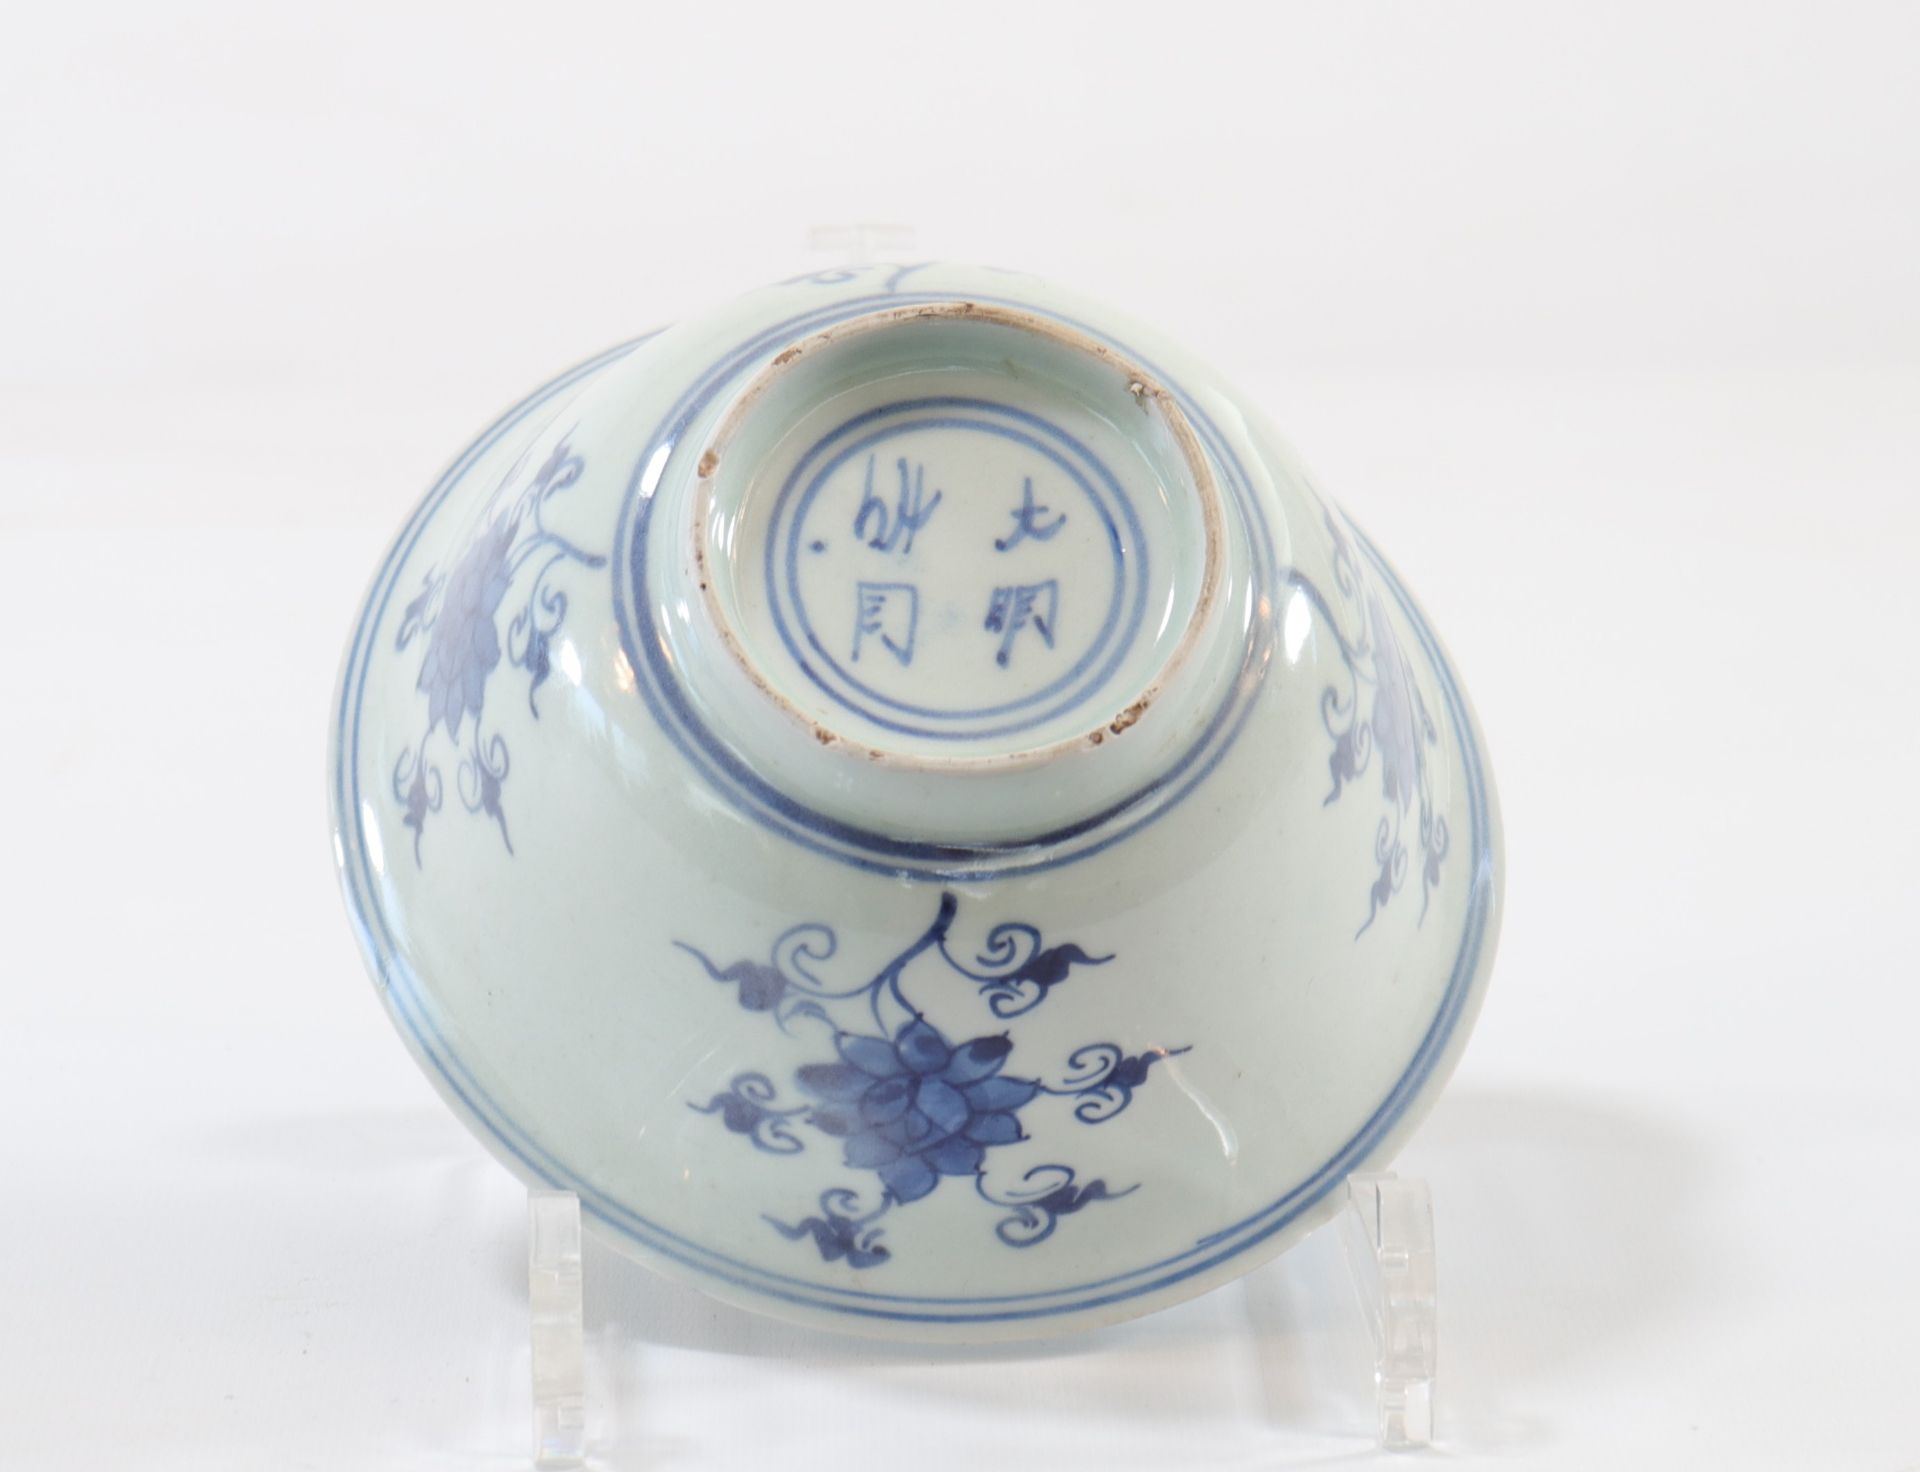 China porcelain bowl white blue mark under the piece - Image 3 of 4